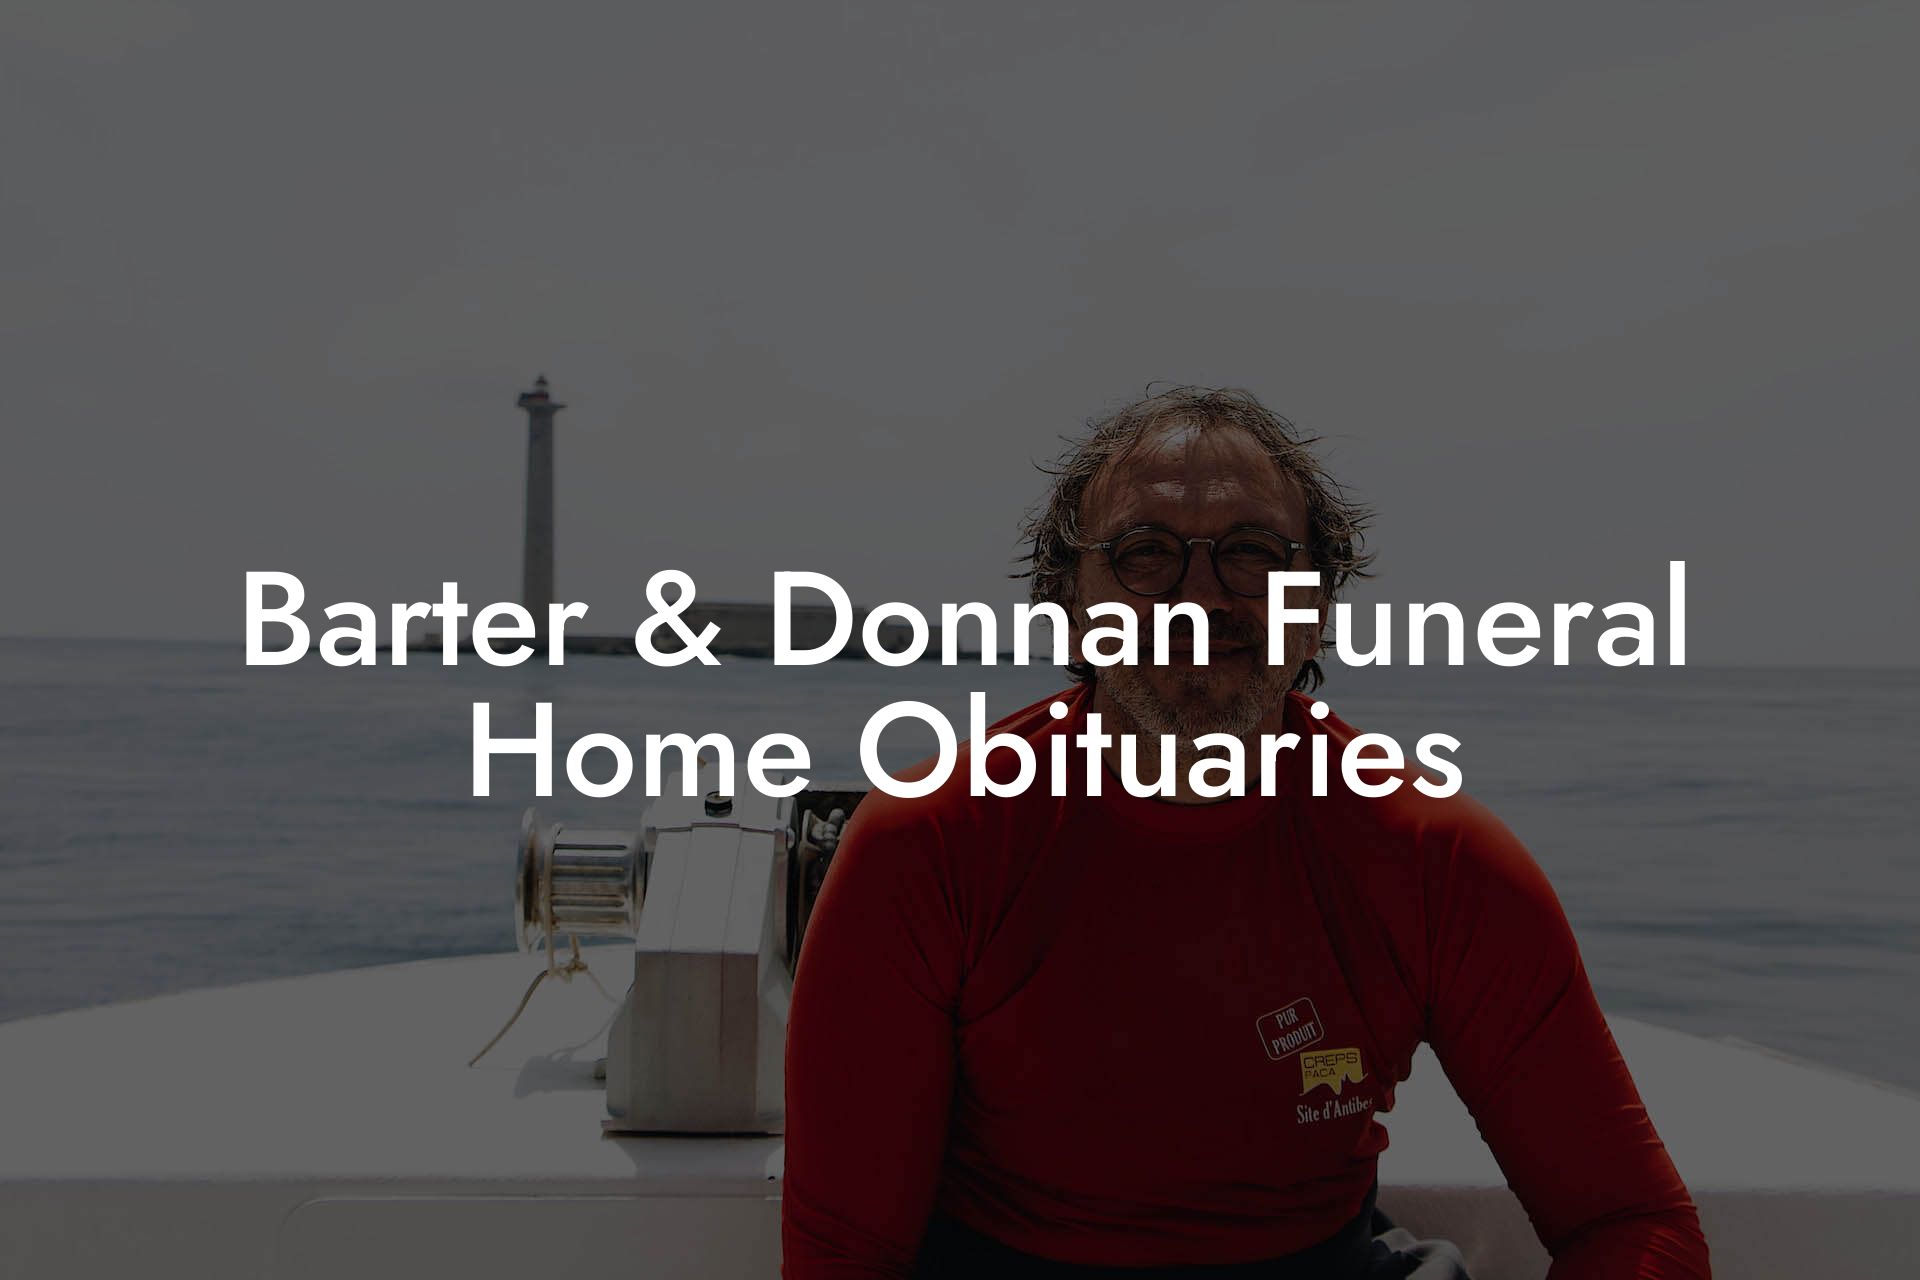 Barter & Donnan Funeral Home Obituaries